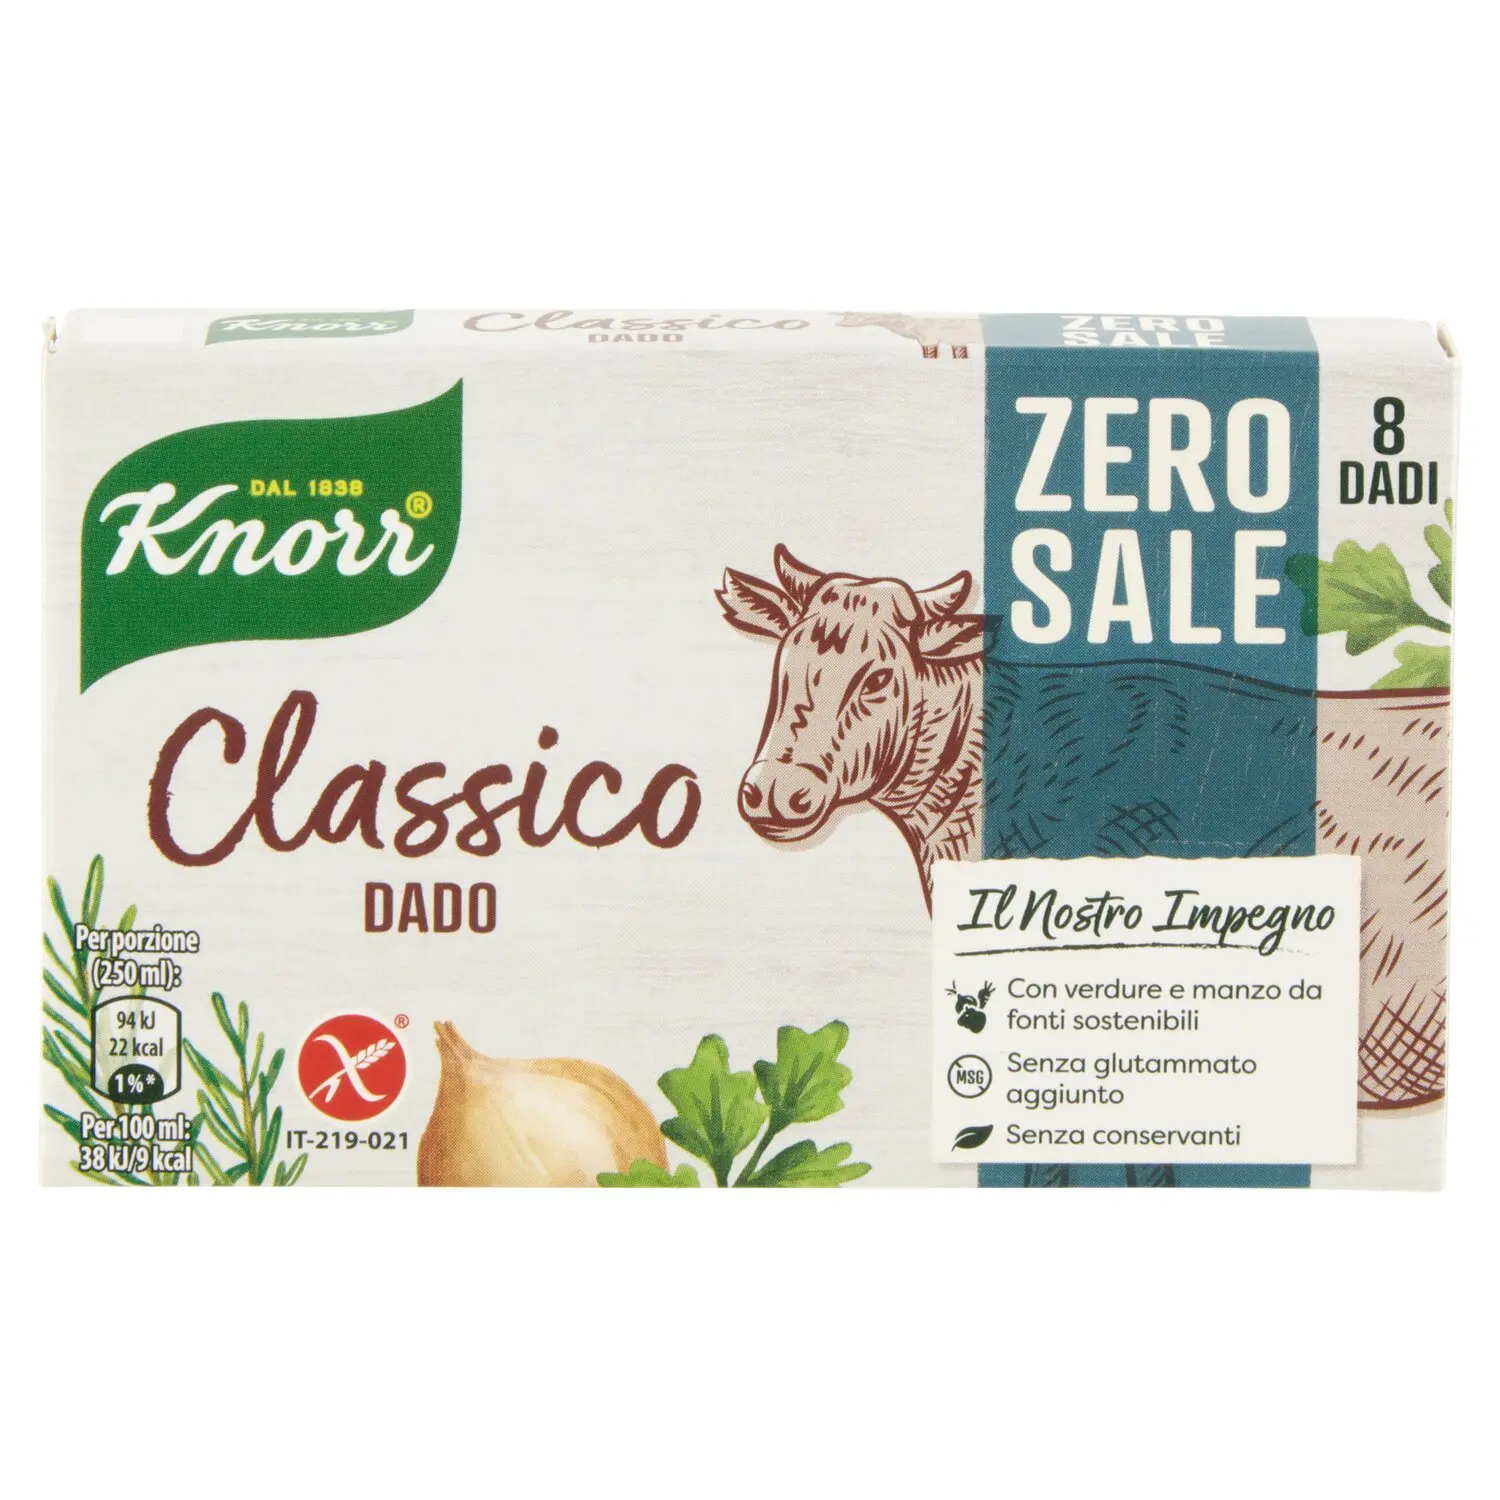 Dadi Knorr classico x 10 